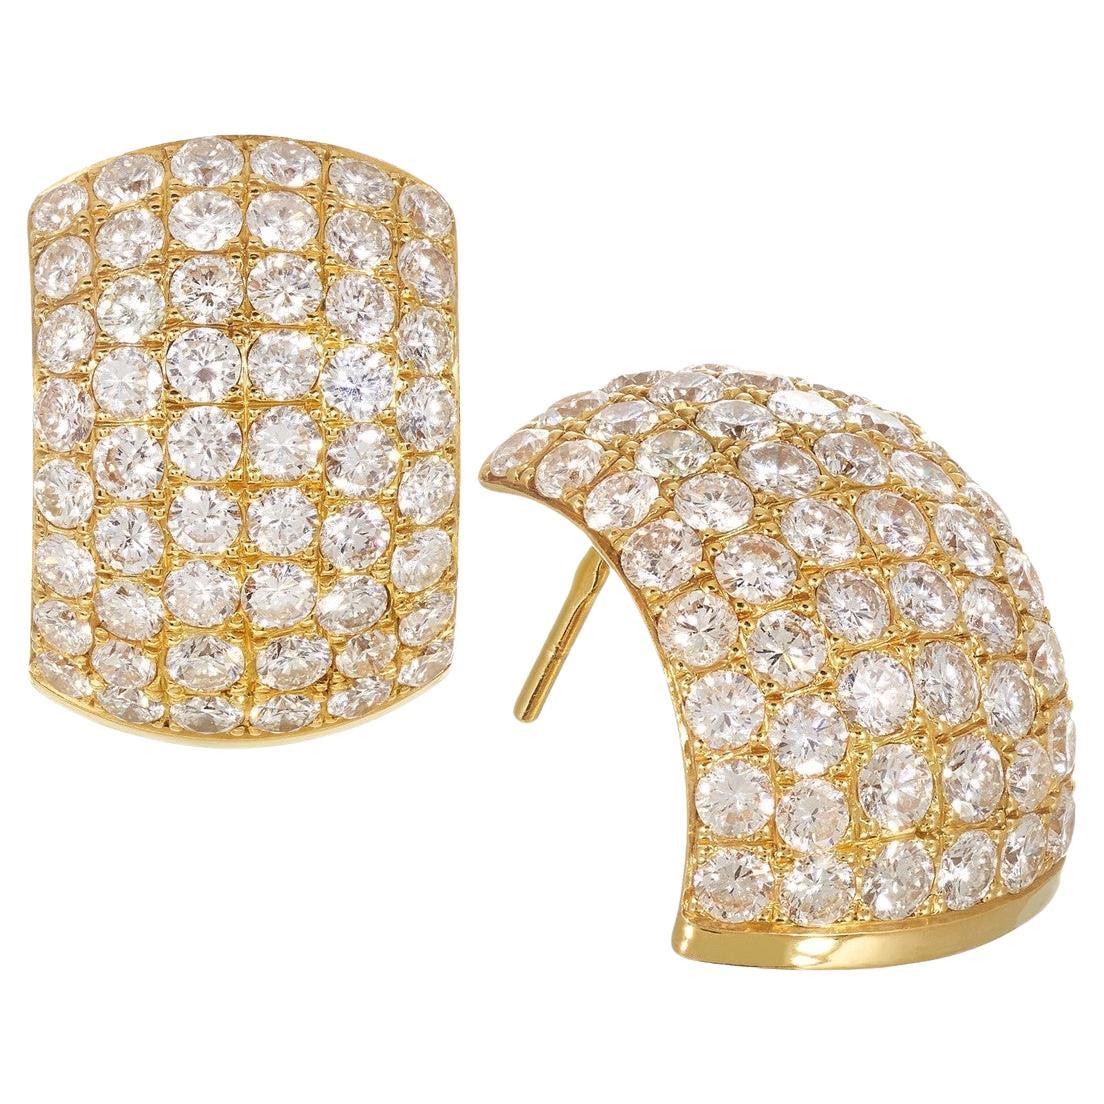 5.63 Carat Diamond Hoop Earrings Set in Yellow Gold